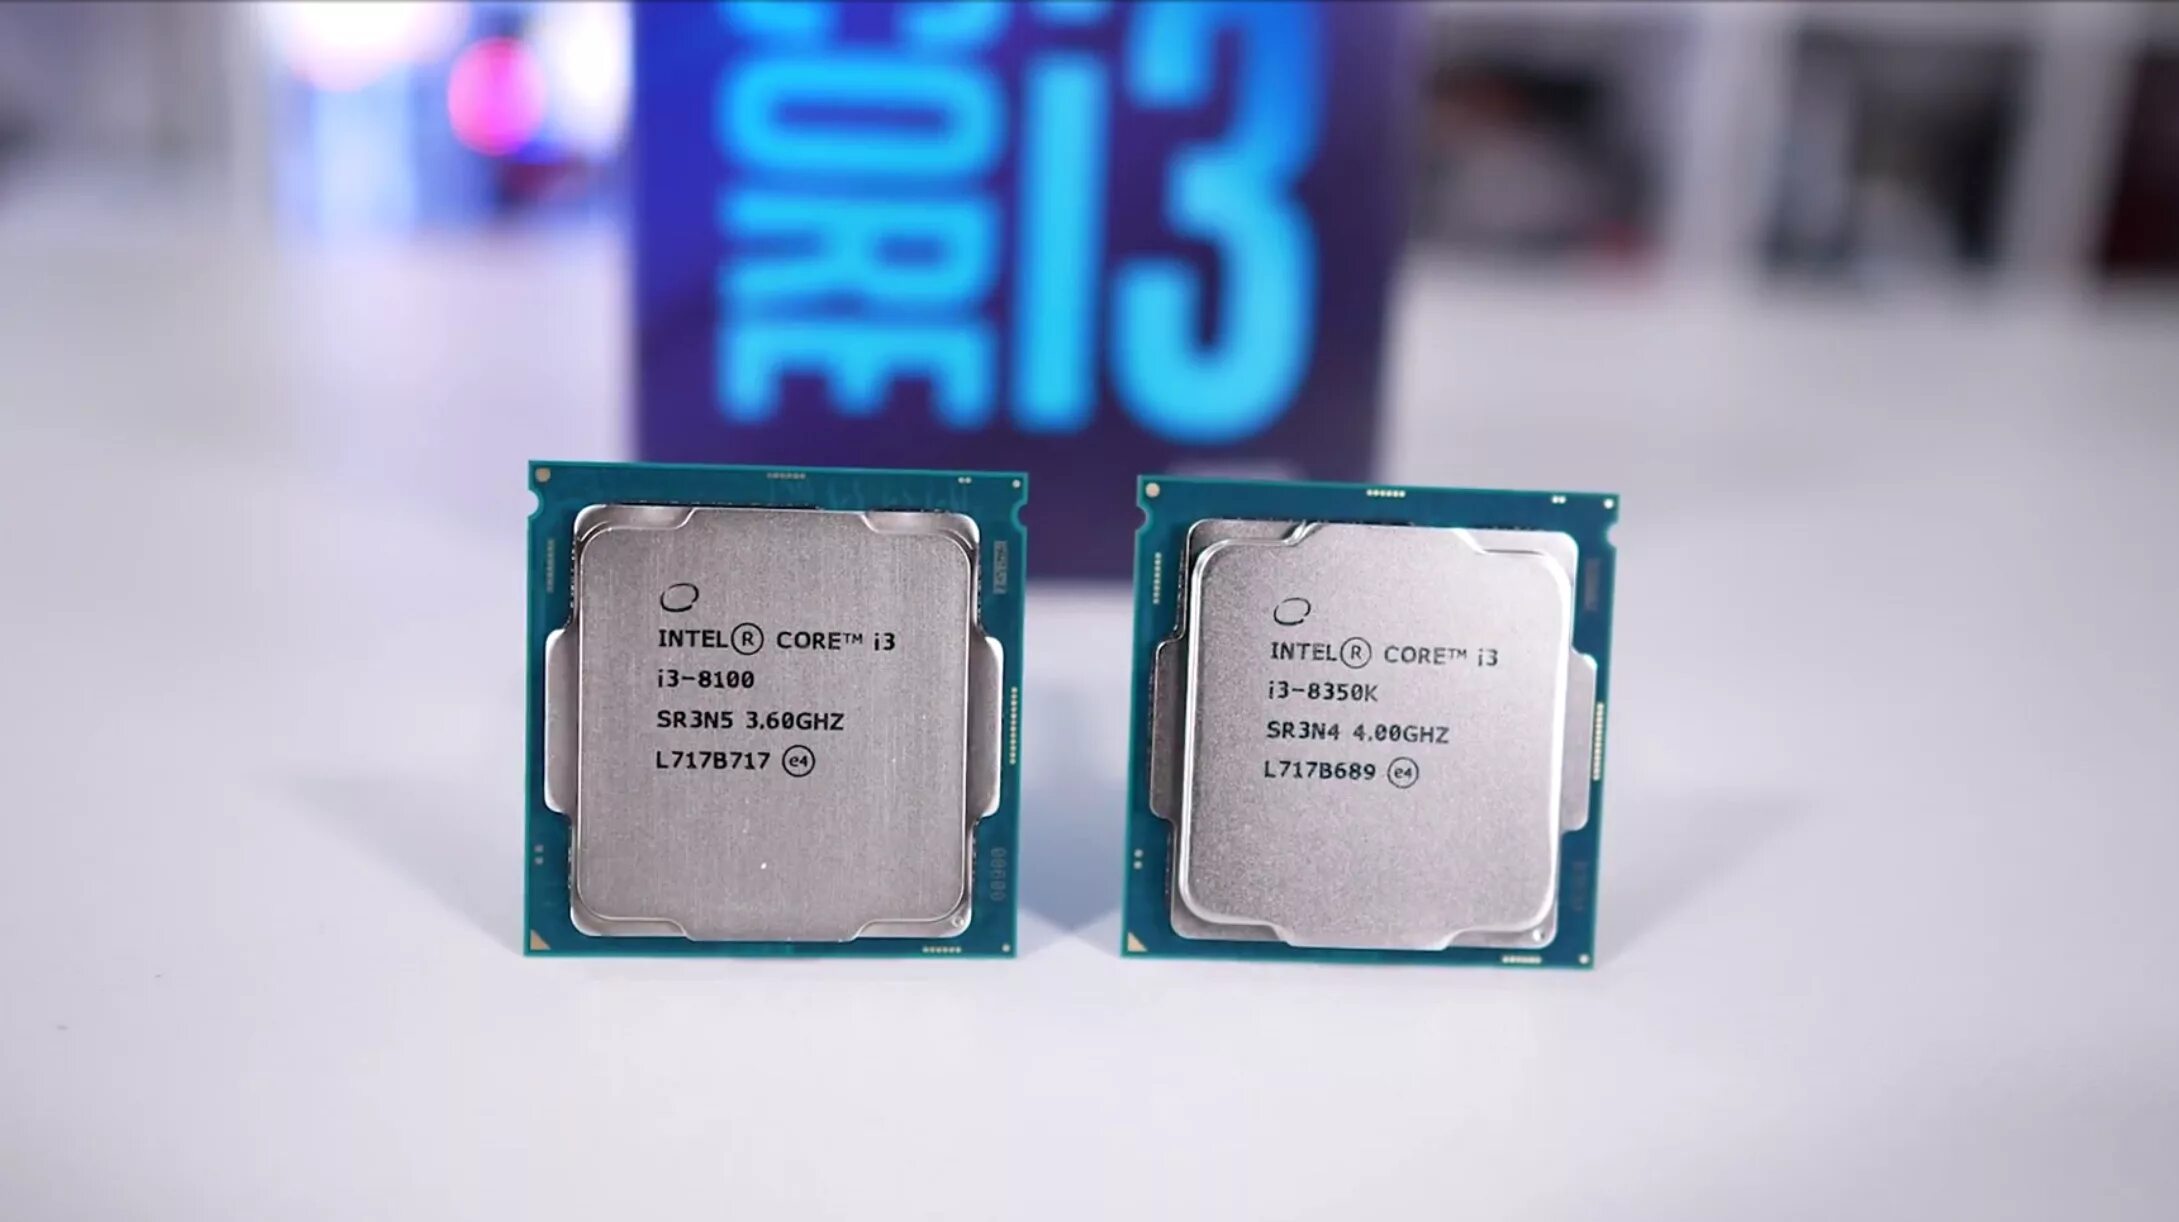 Core i3 8100. Intel(r) Core(TM) i3-8100 CPU @ 3.60GHZ. Intel Core i3 Series. Intel Core i 3 3.60 GHZ.